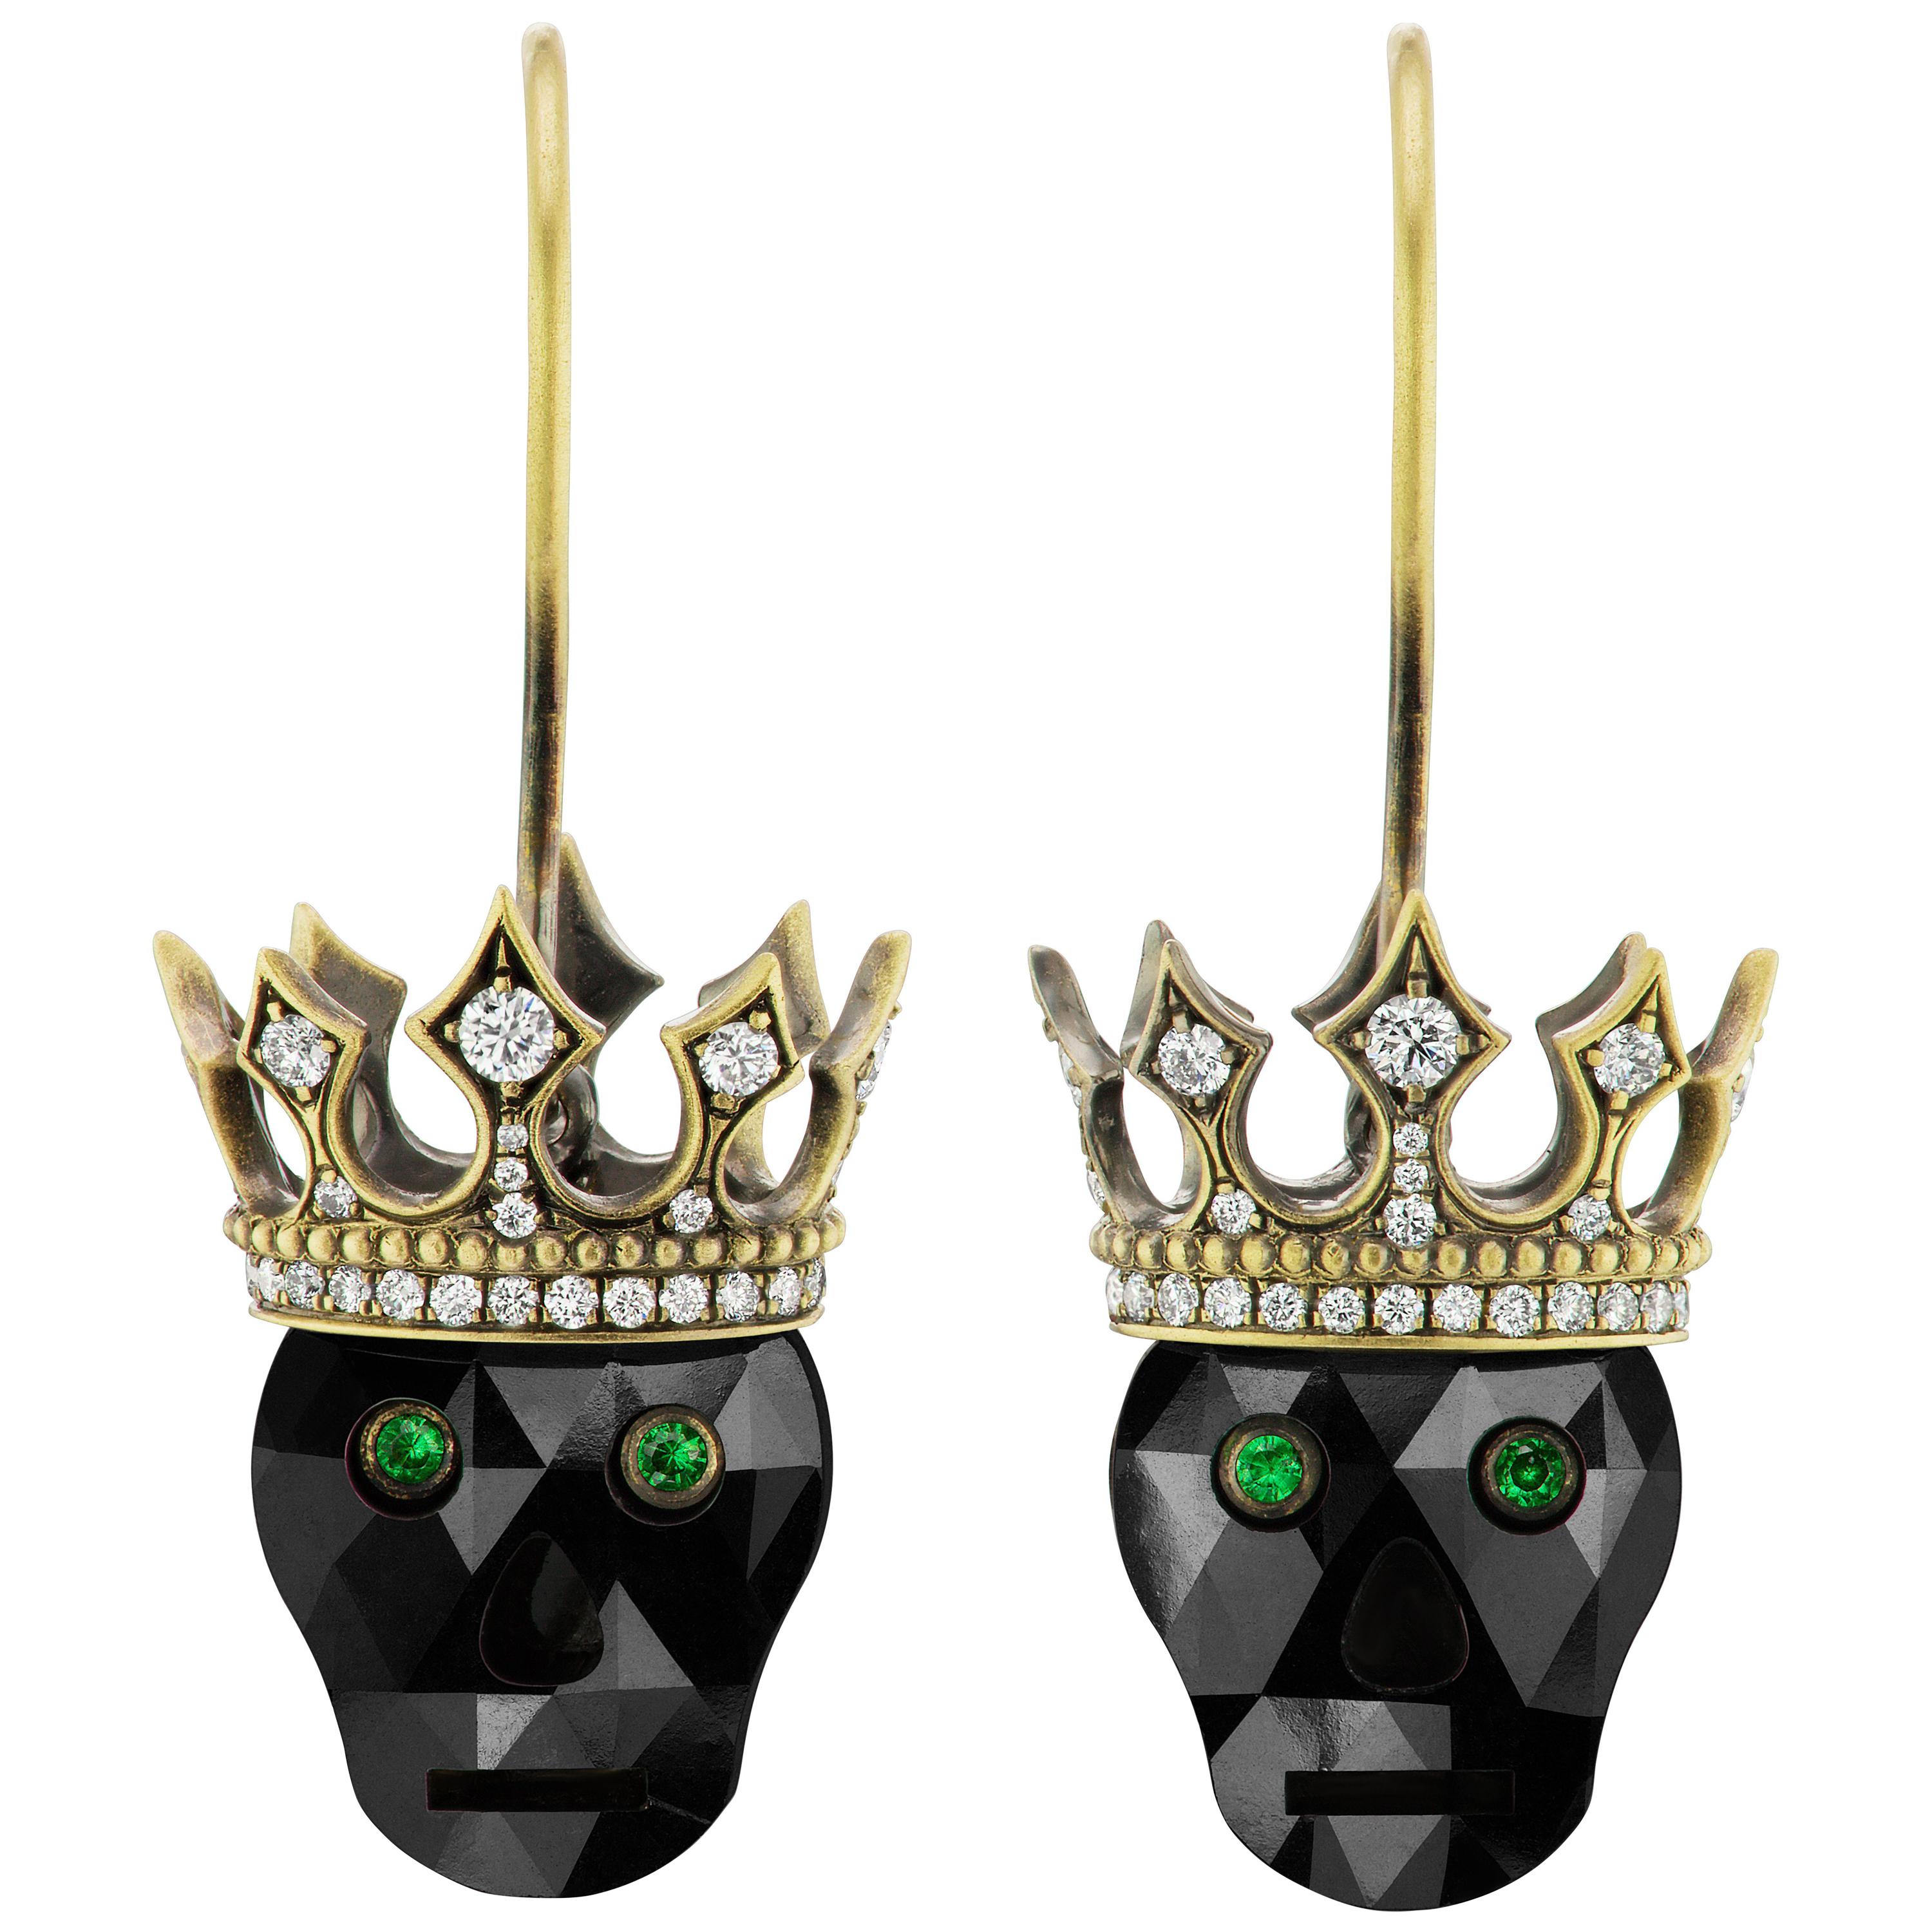 Wendy Brandes Memento Mori Black Diamond Skull Earrings With Crowns